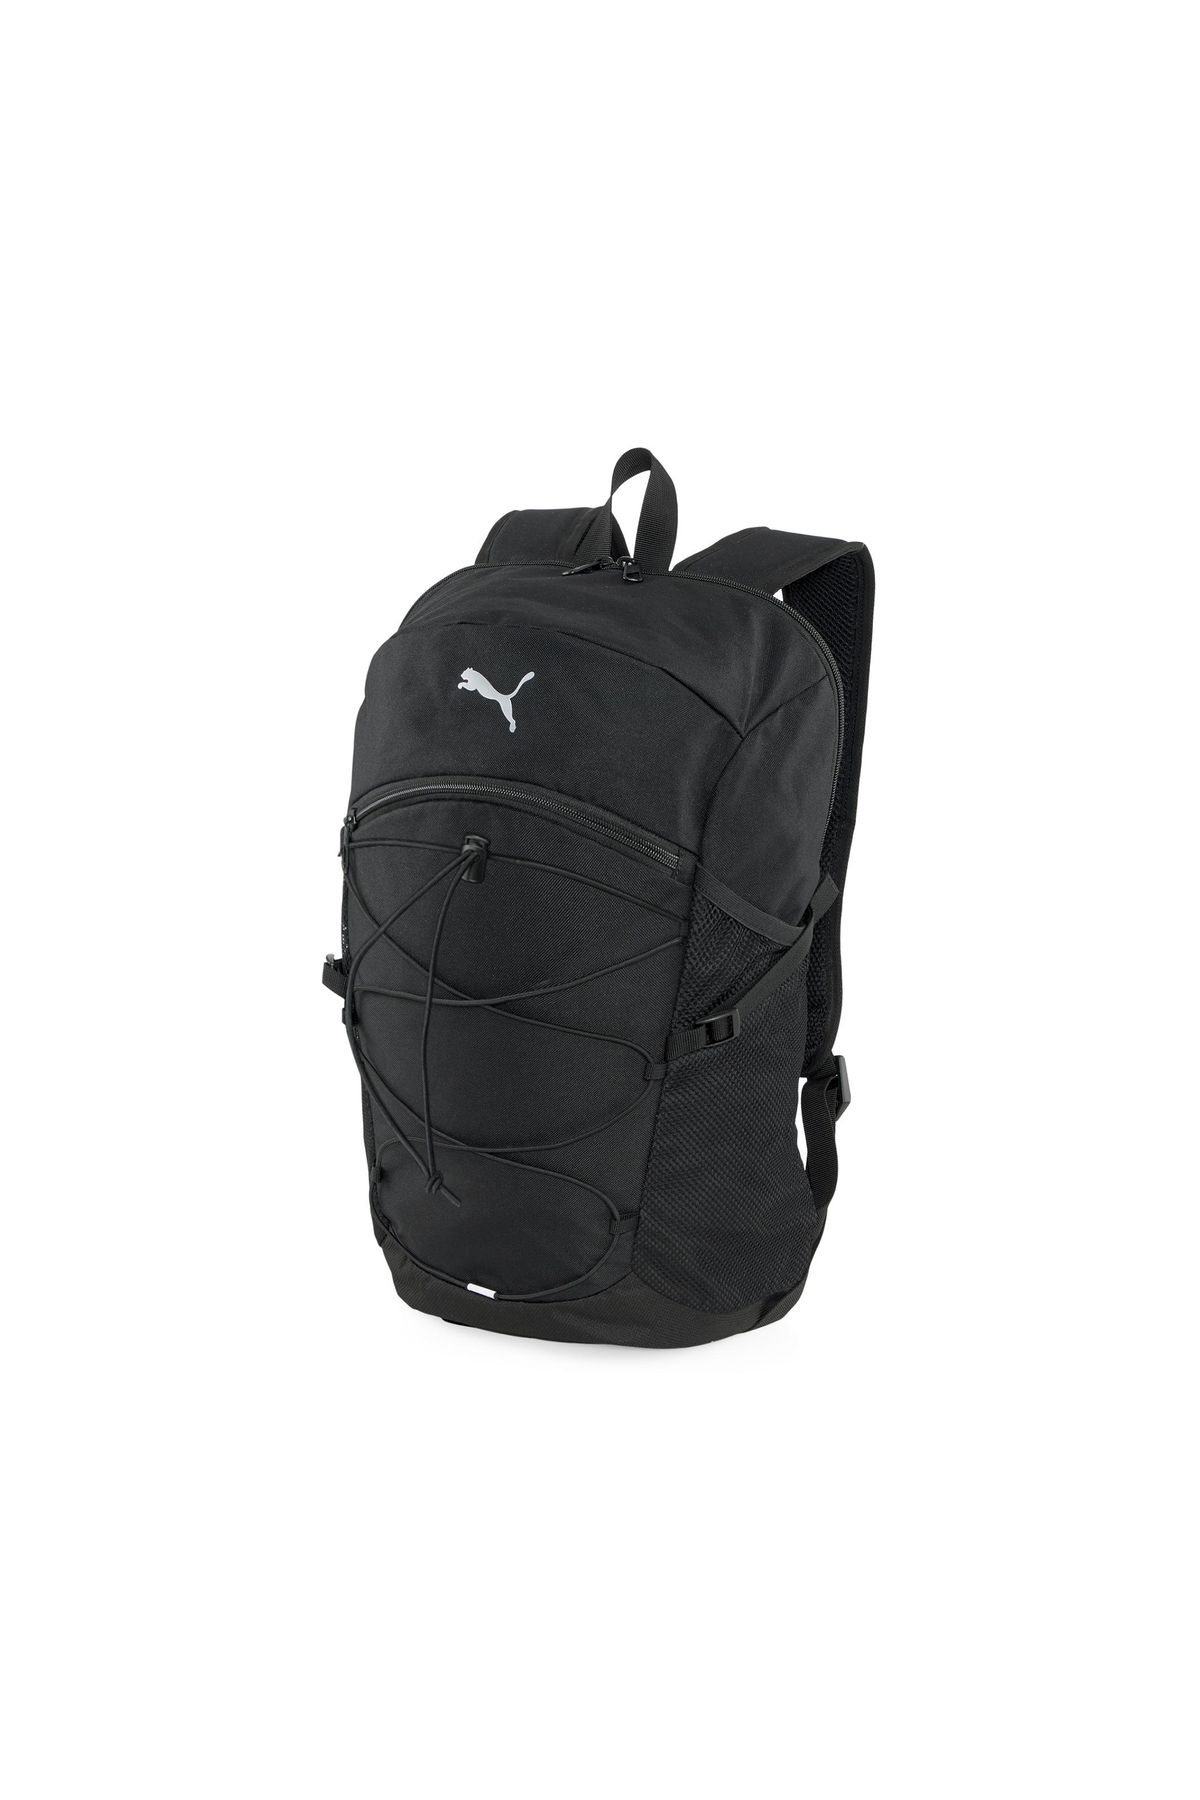 Puma Plus Pro Backpack Sırt Çantası 7952101 Siyah